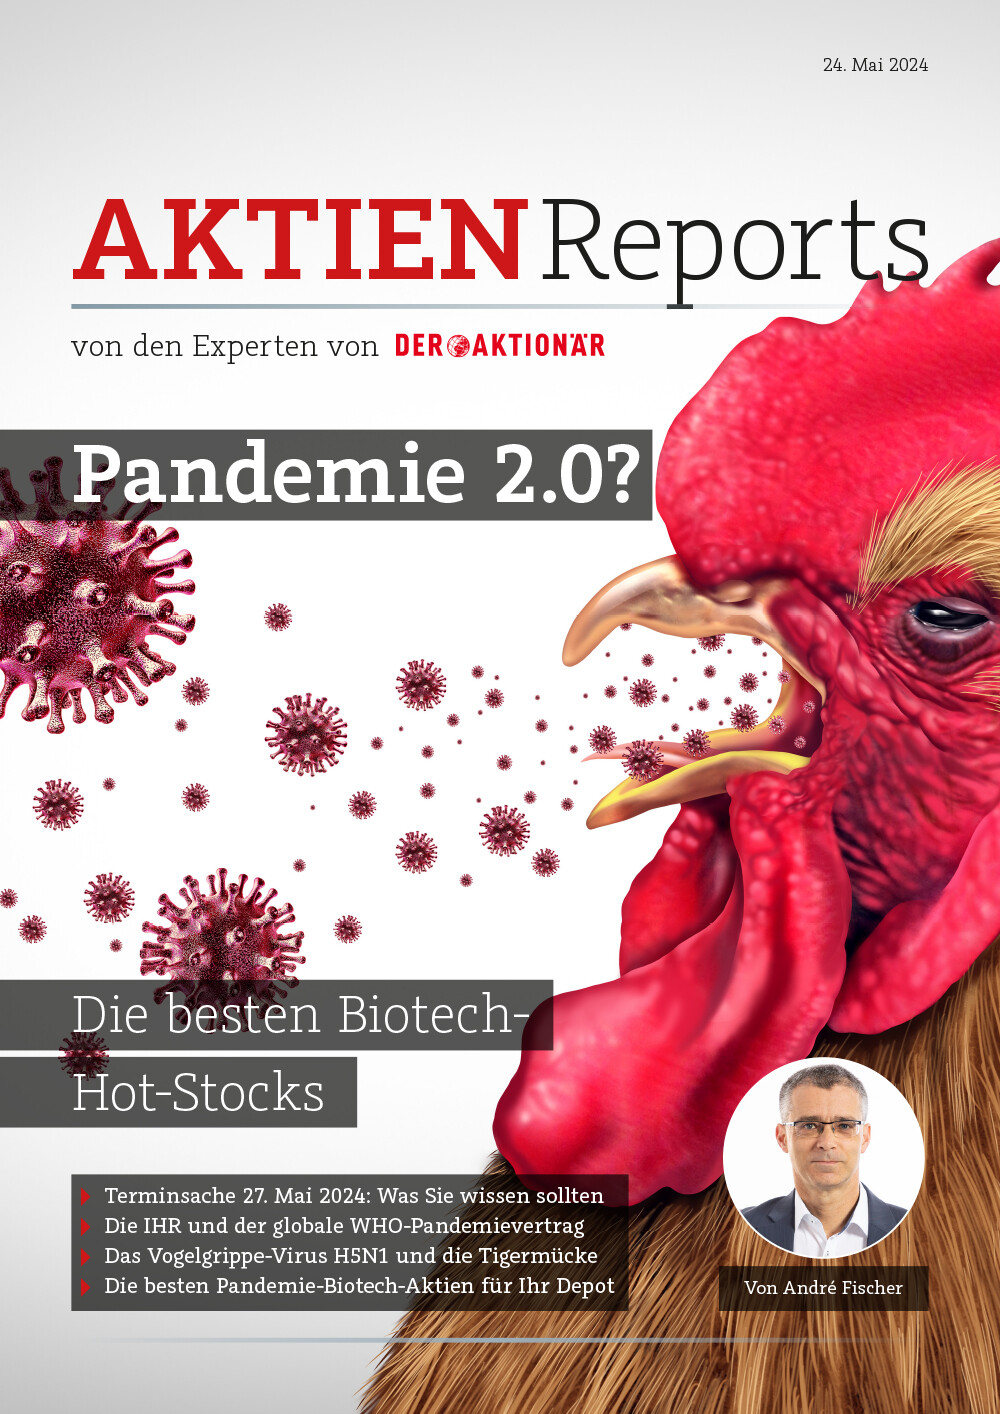 Aktienreport, Aktien-Report, Pandemie, Vogelgrippe